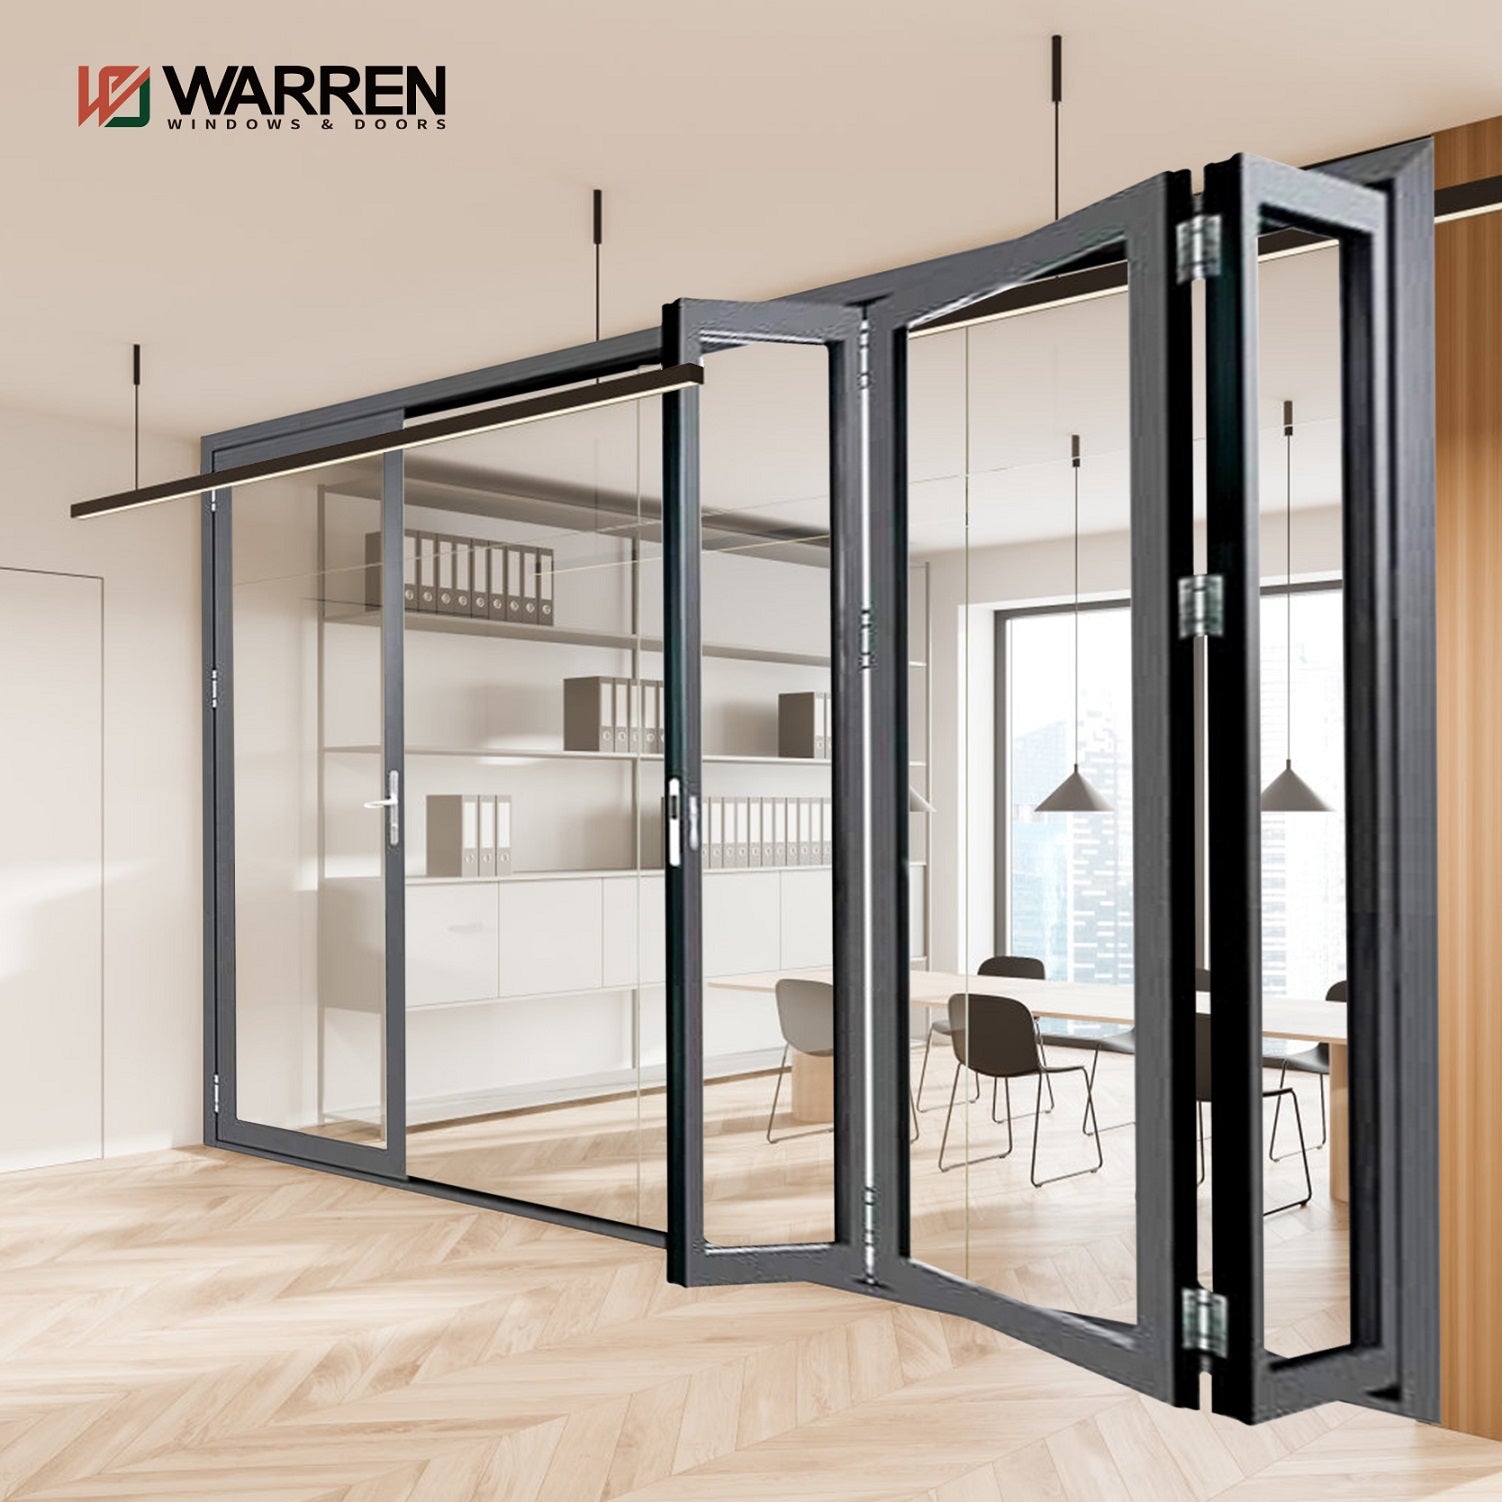 Warren 101*35 folding door with Sobinco Hardware and warren glass factory sale